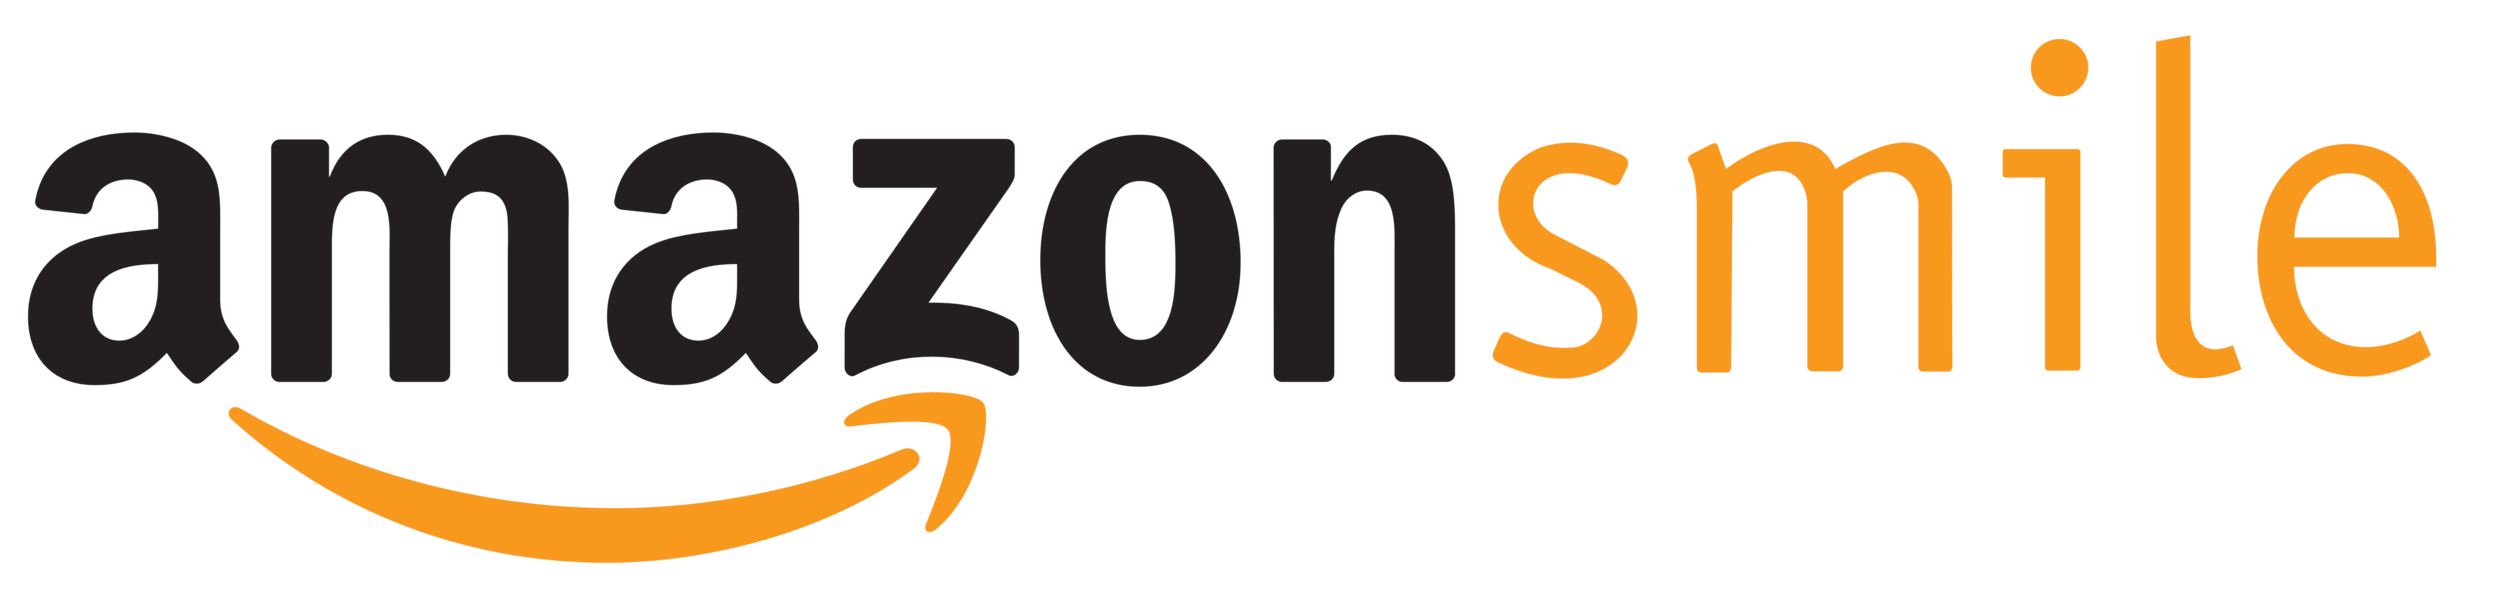 Amazon_Smile_logo.png